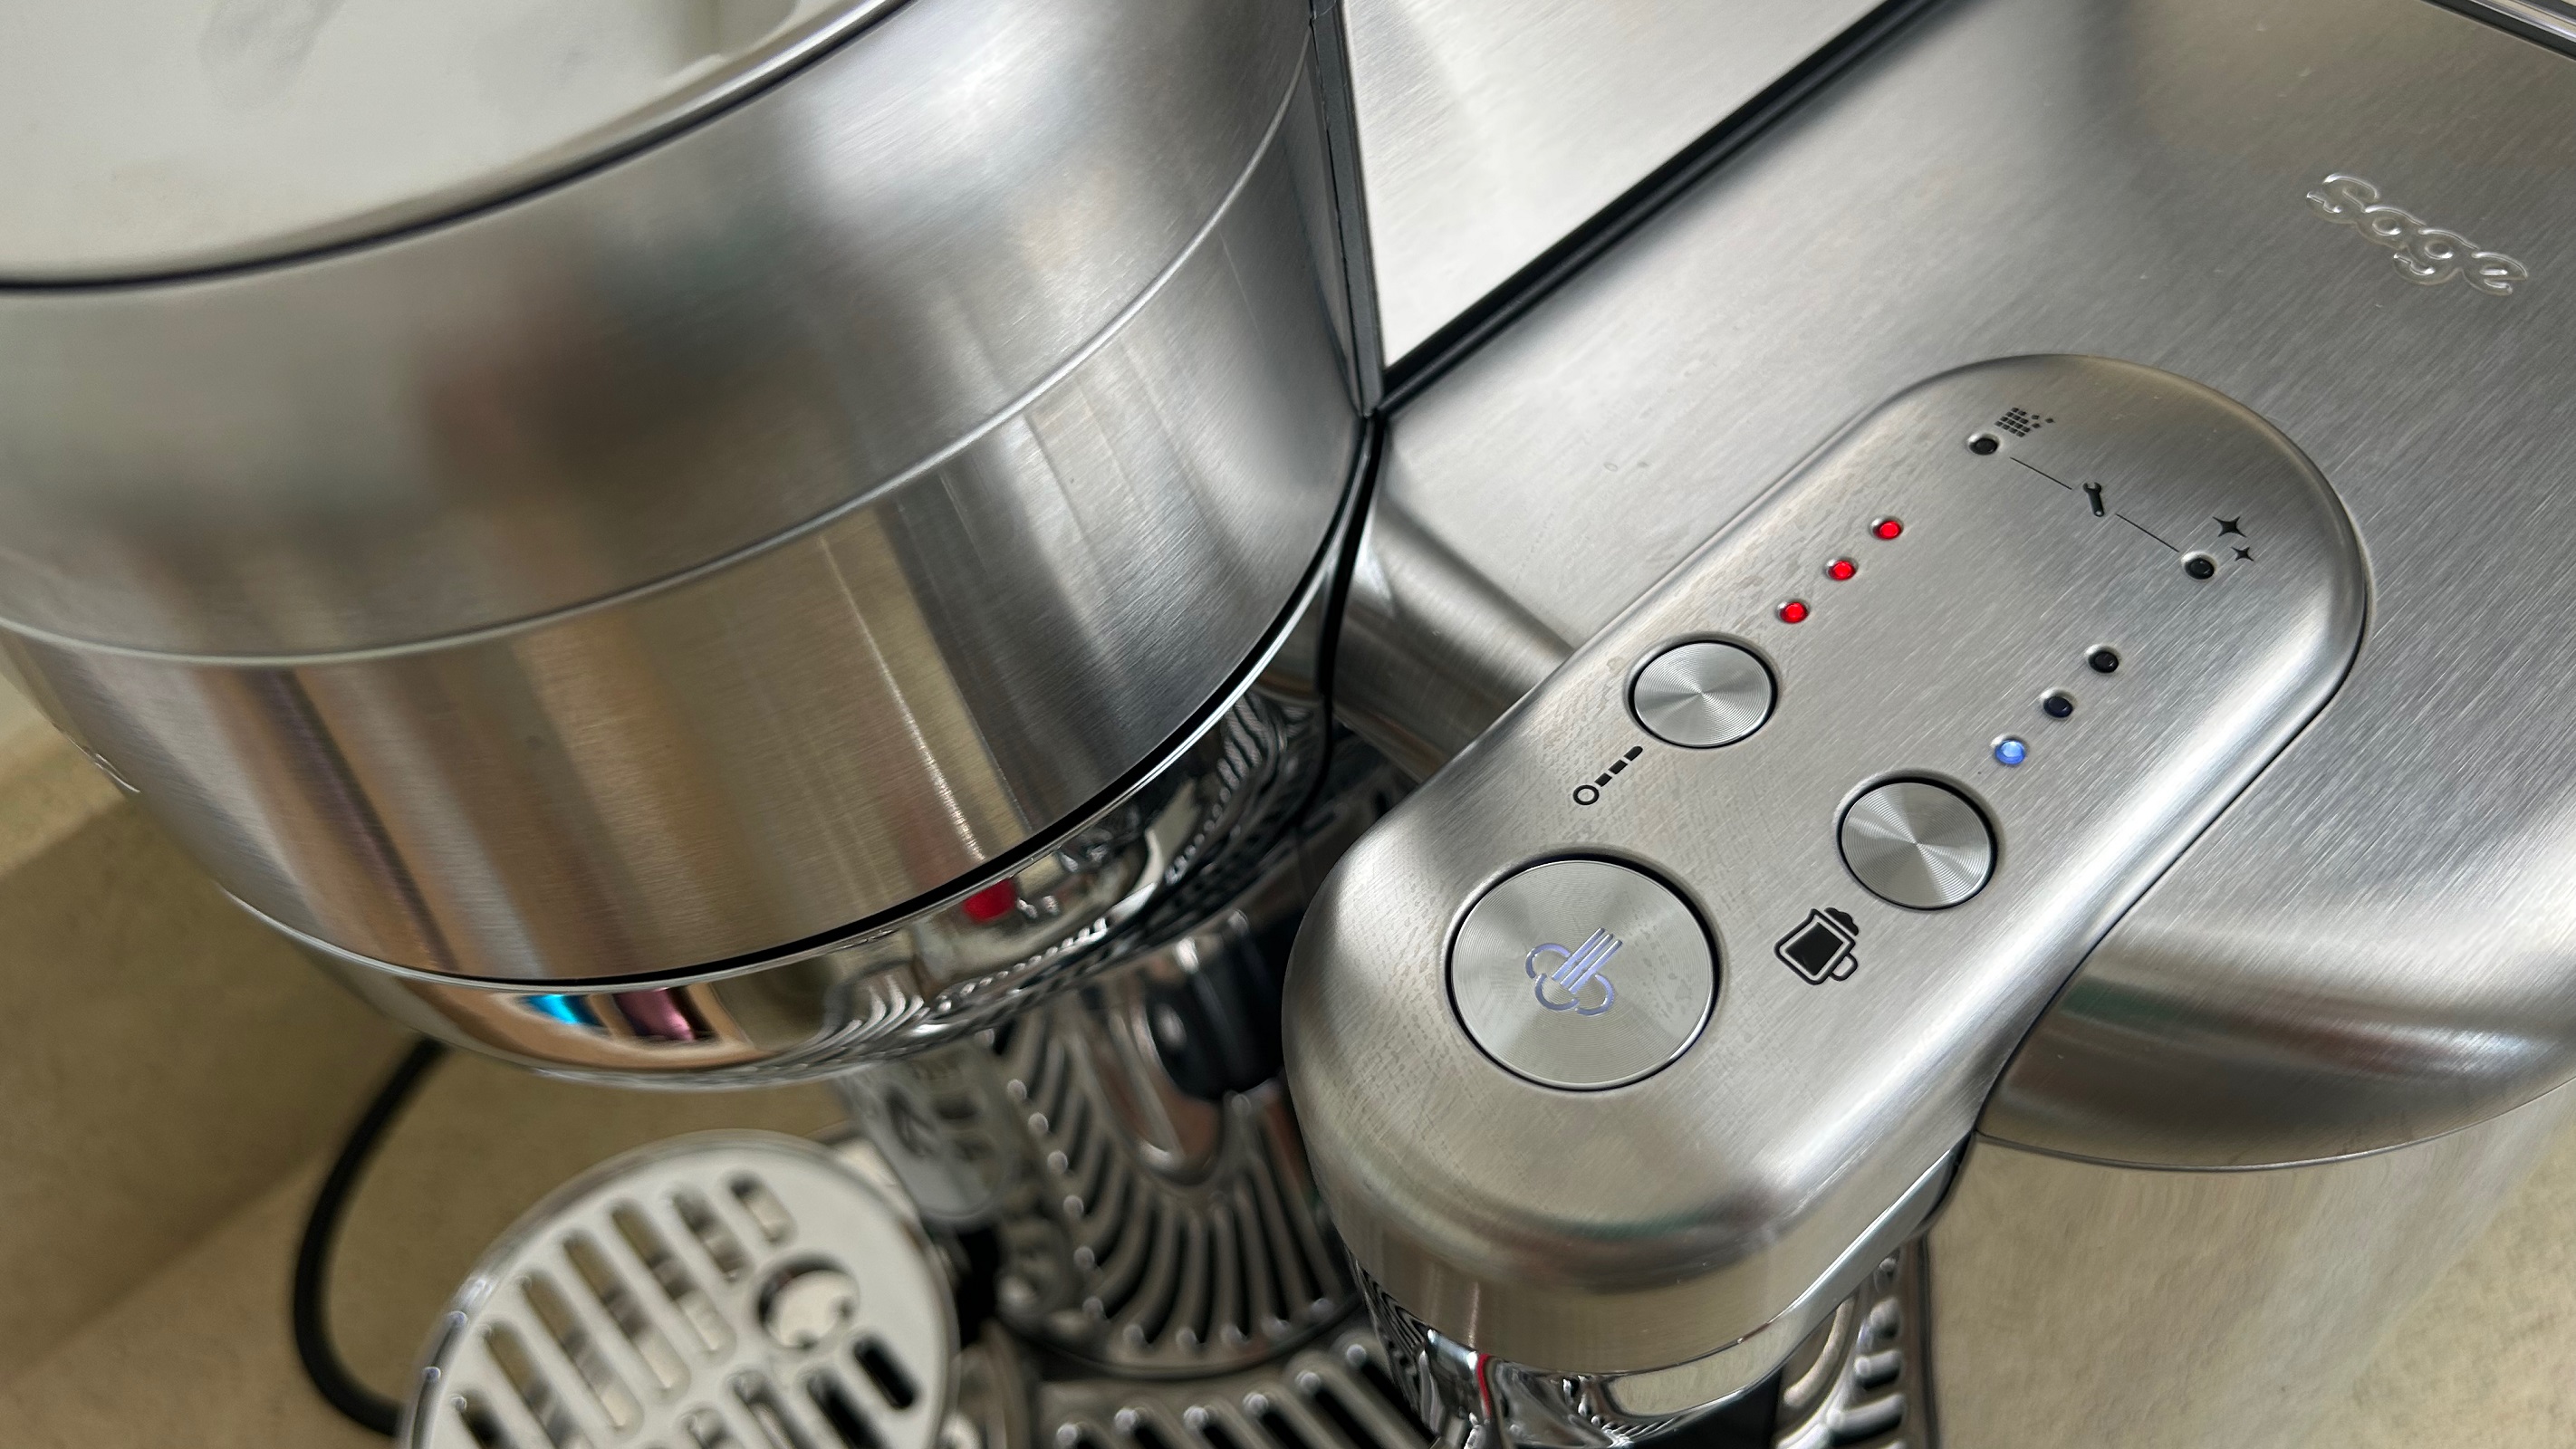 Close up of steam controls on the Nespresso Vertuo Creatista